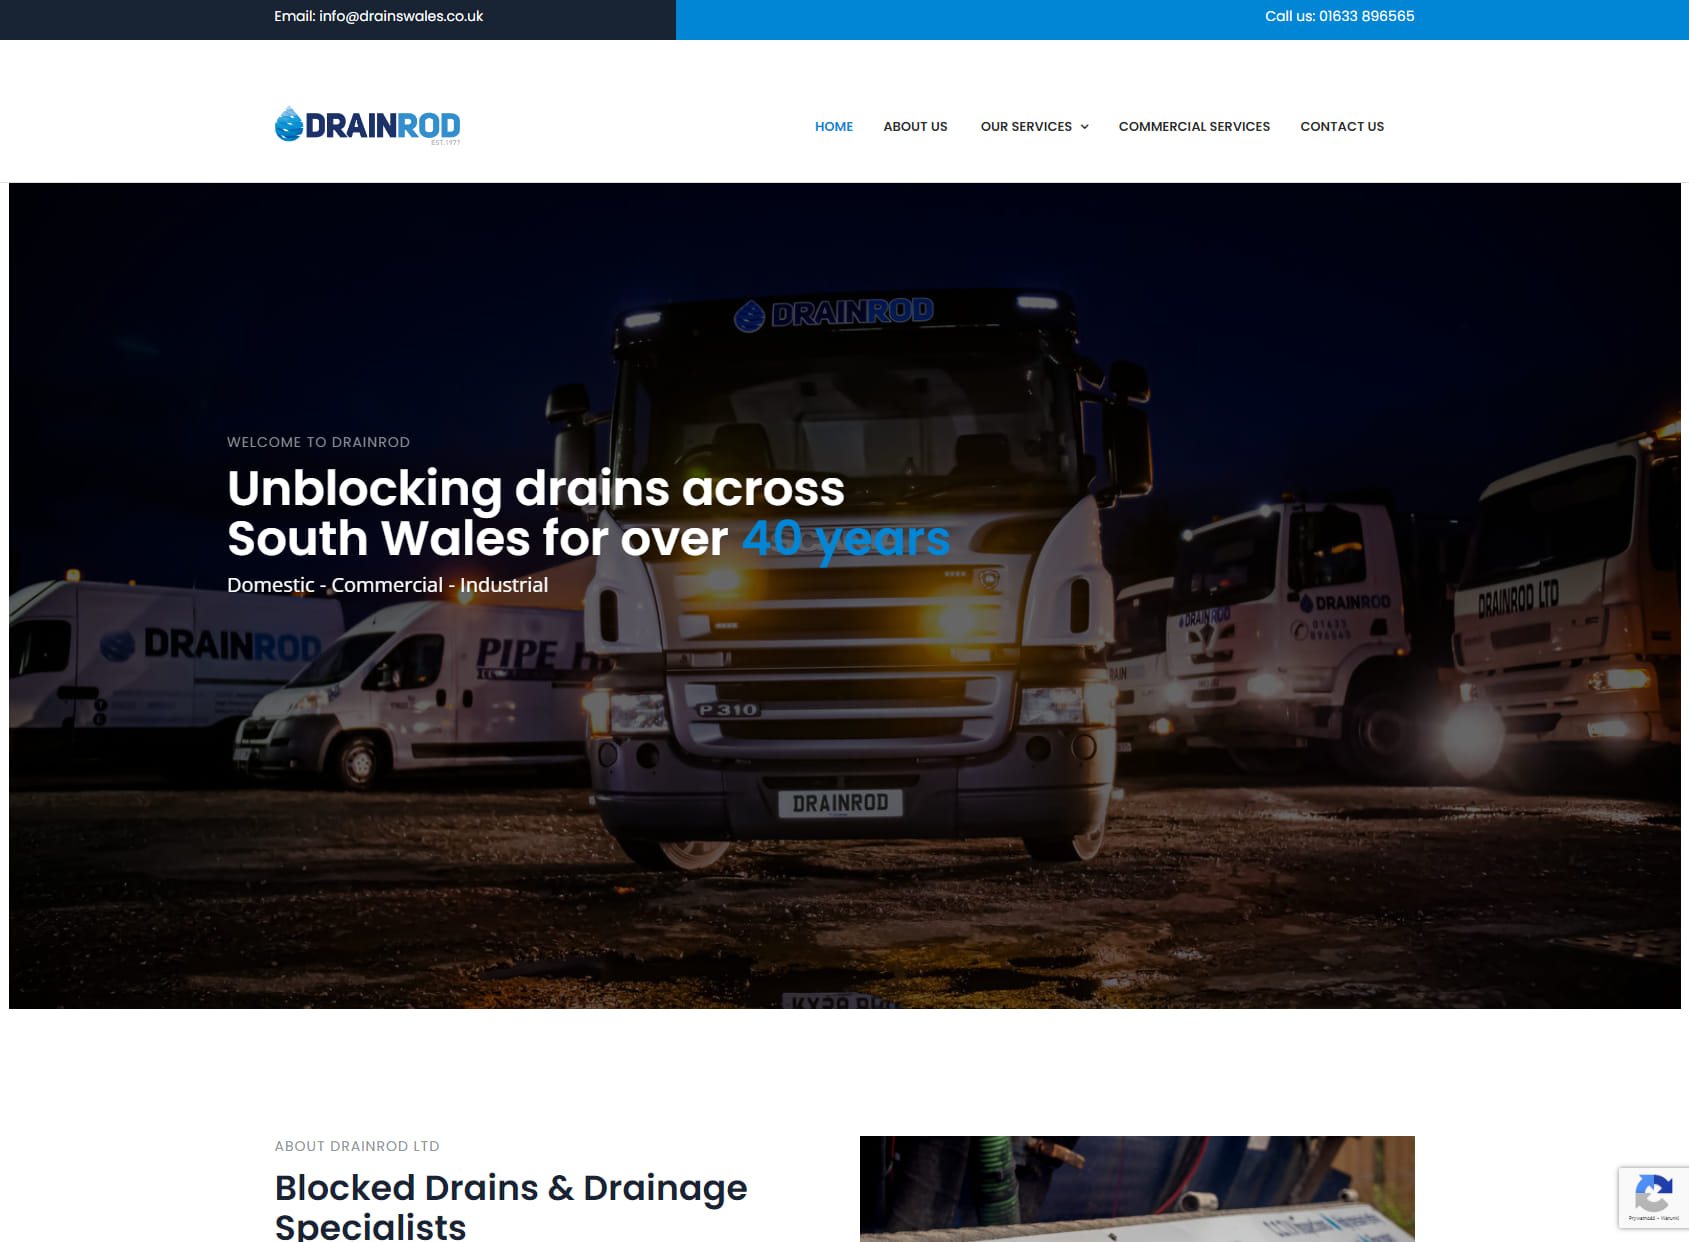 Drainrod Ltd